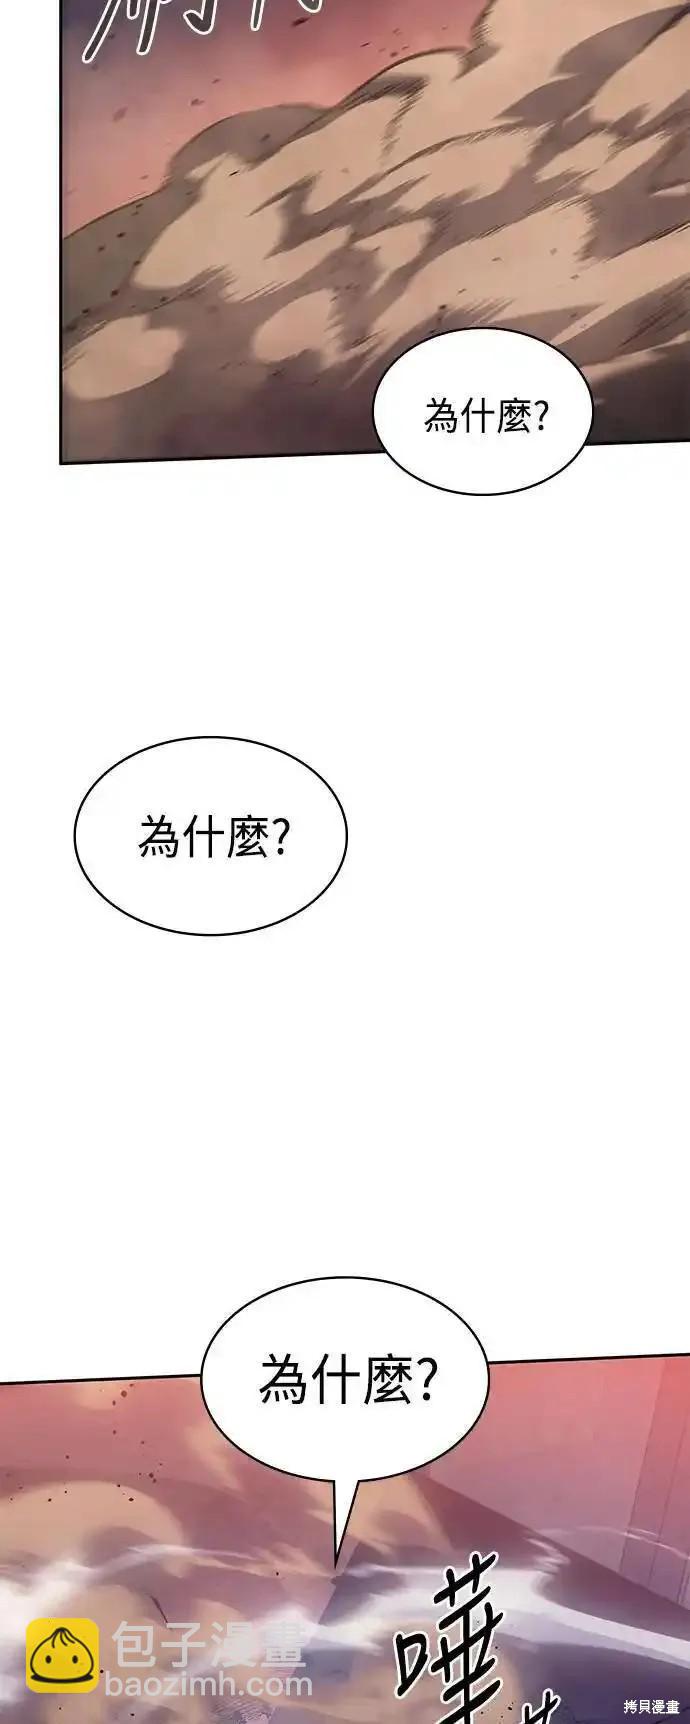 7FATES CHAKHO - 第37話(1/2) - 6